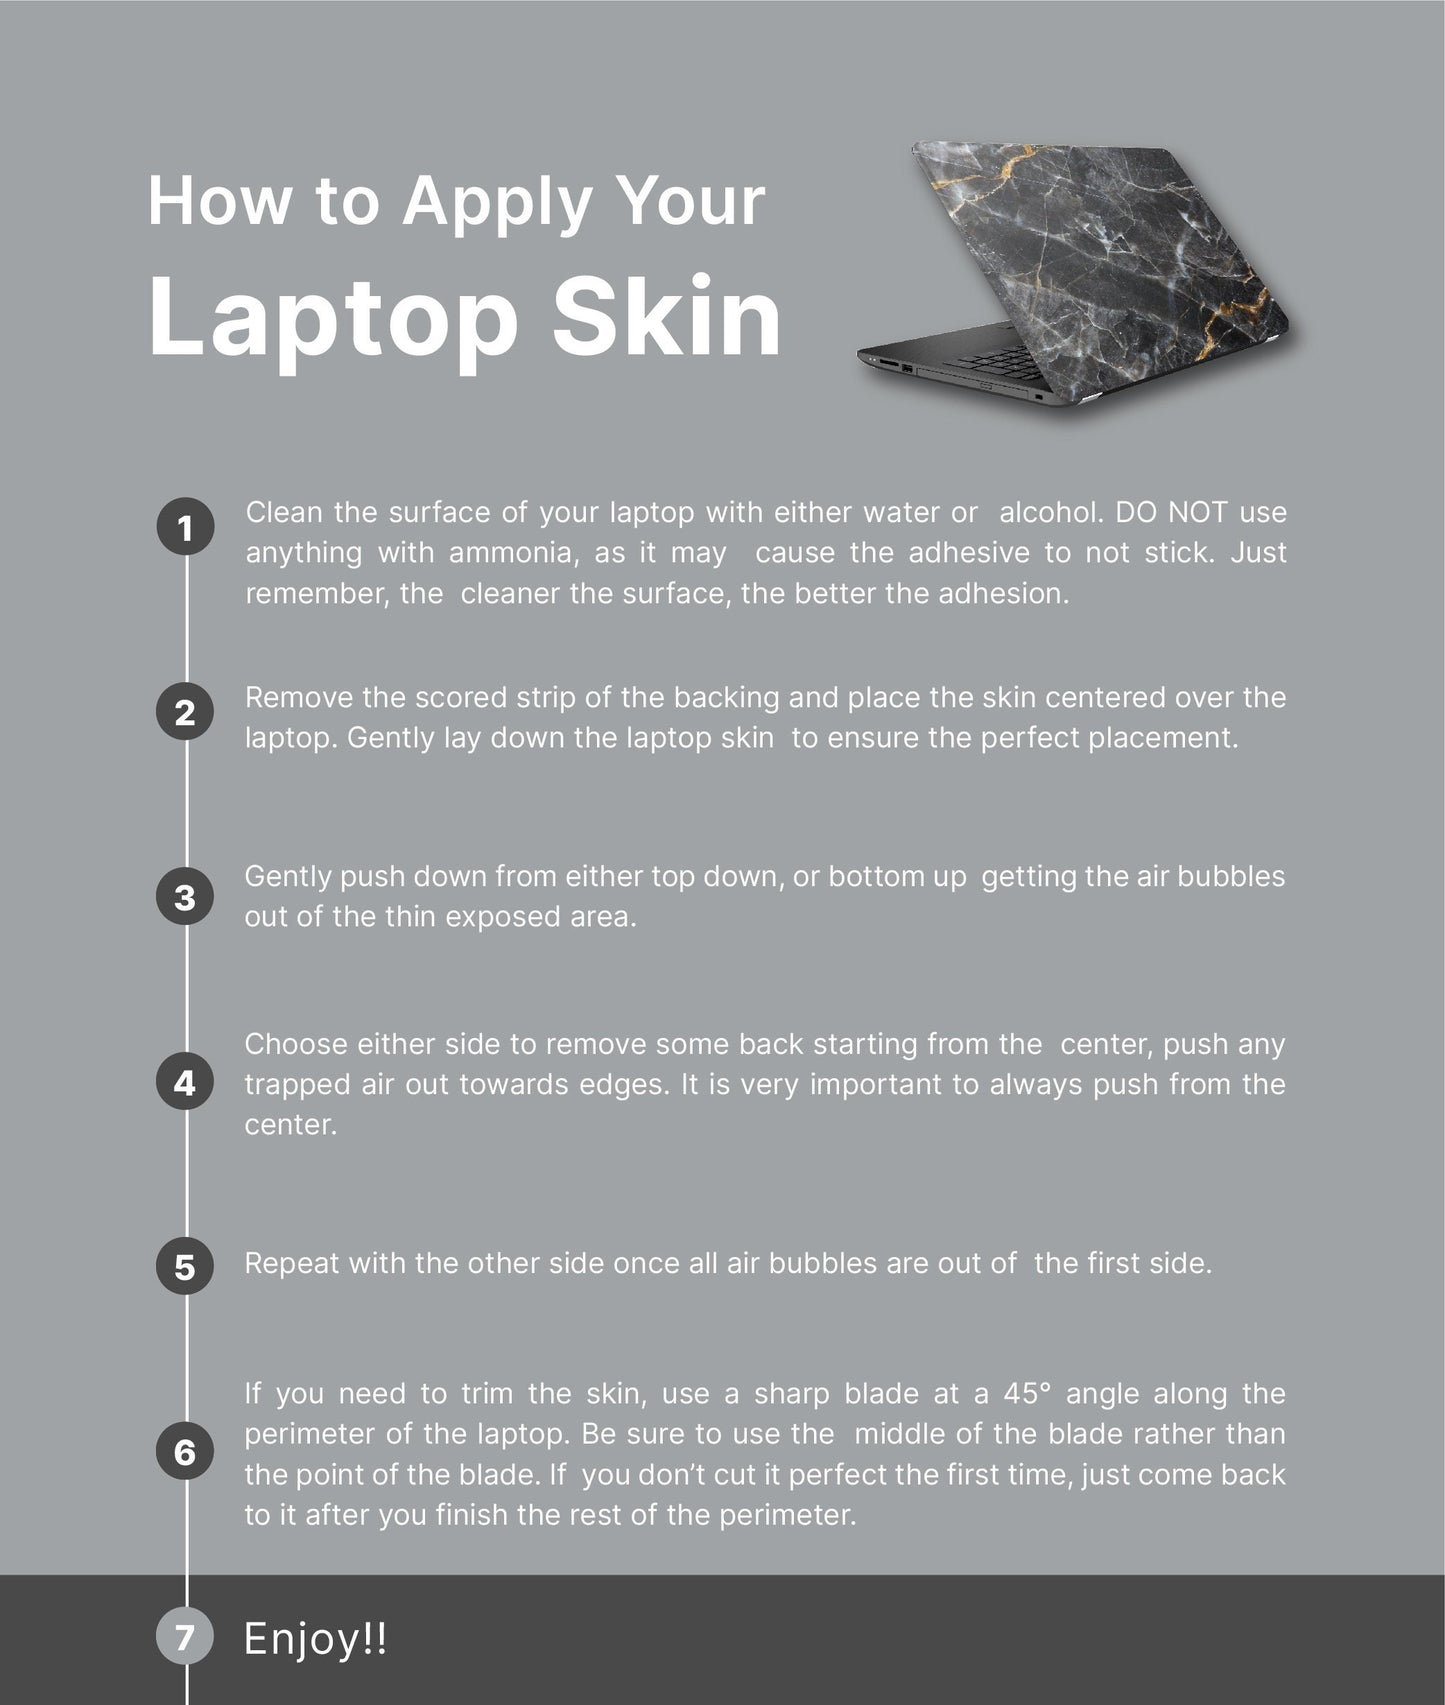 Tropical Purple Laptop Skin, Laptop Cover, Laptop Skins, Removable Laptop Skins, Laptop Decal, Customized Laptop Skin, Laptop Stickers 243